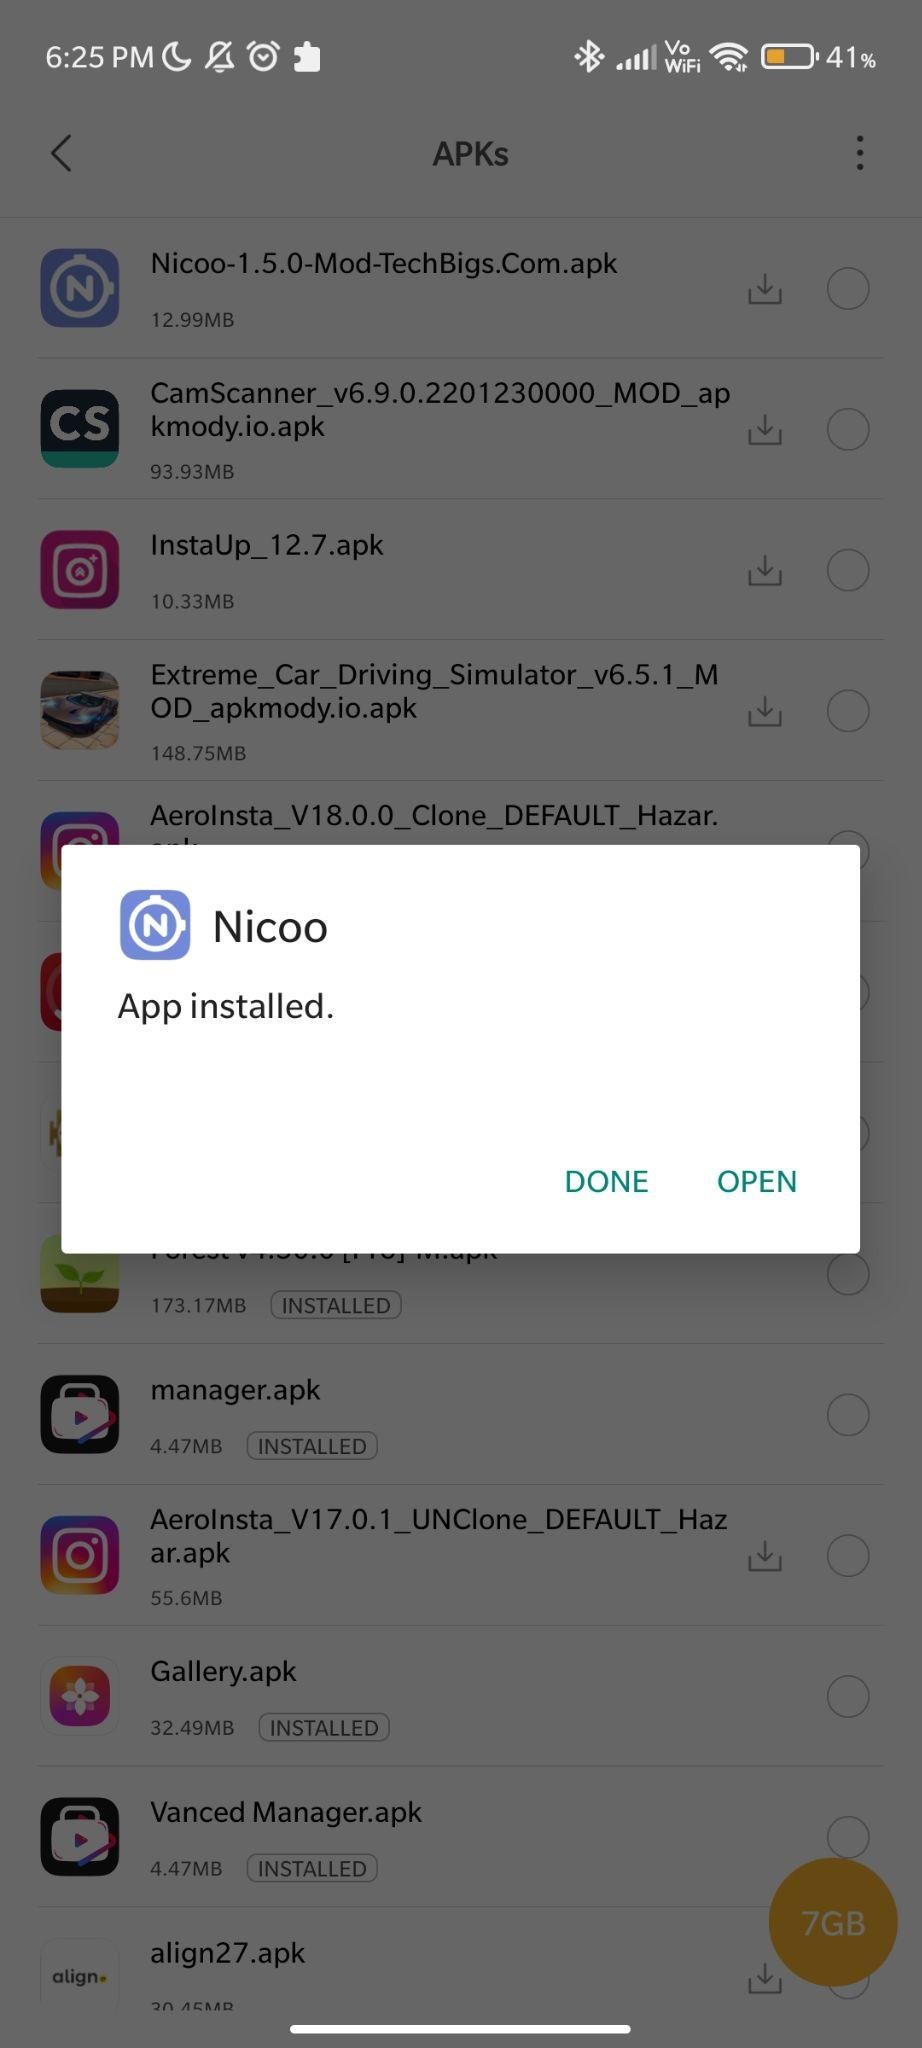 nicoo apk installed